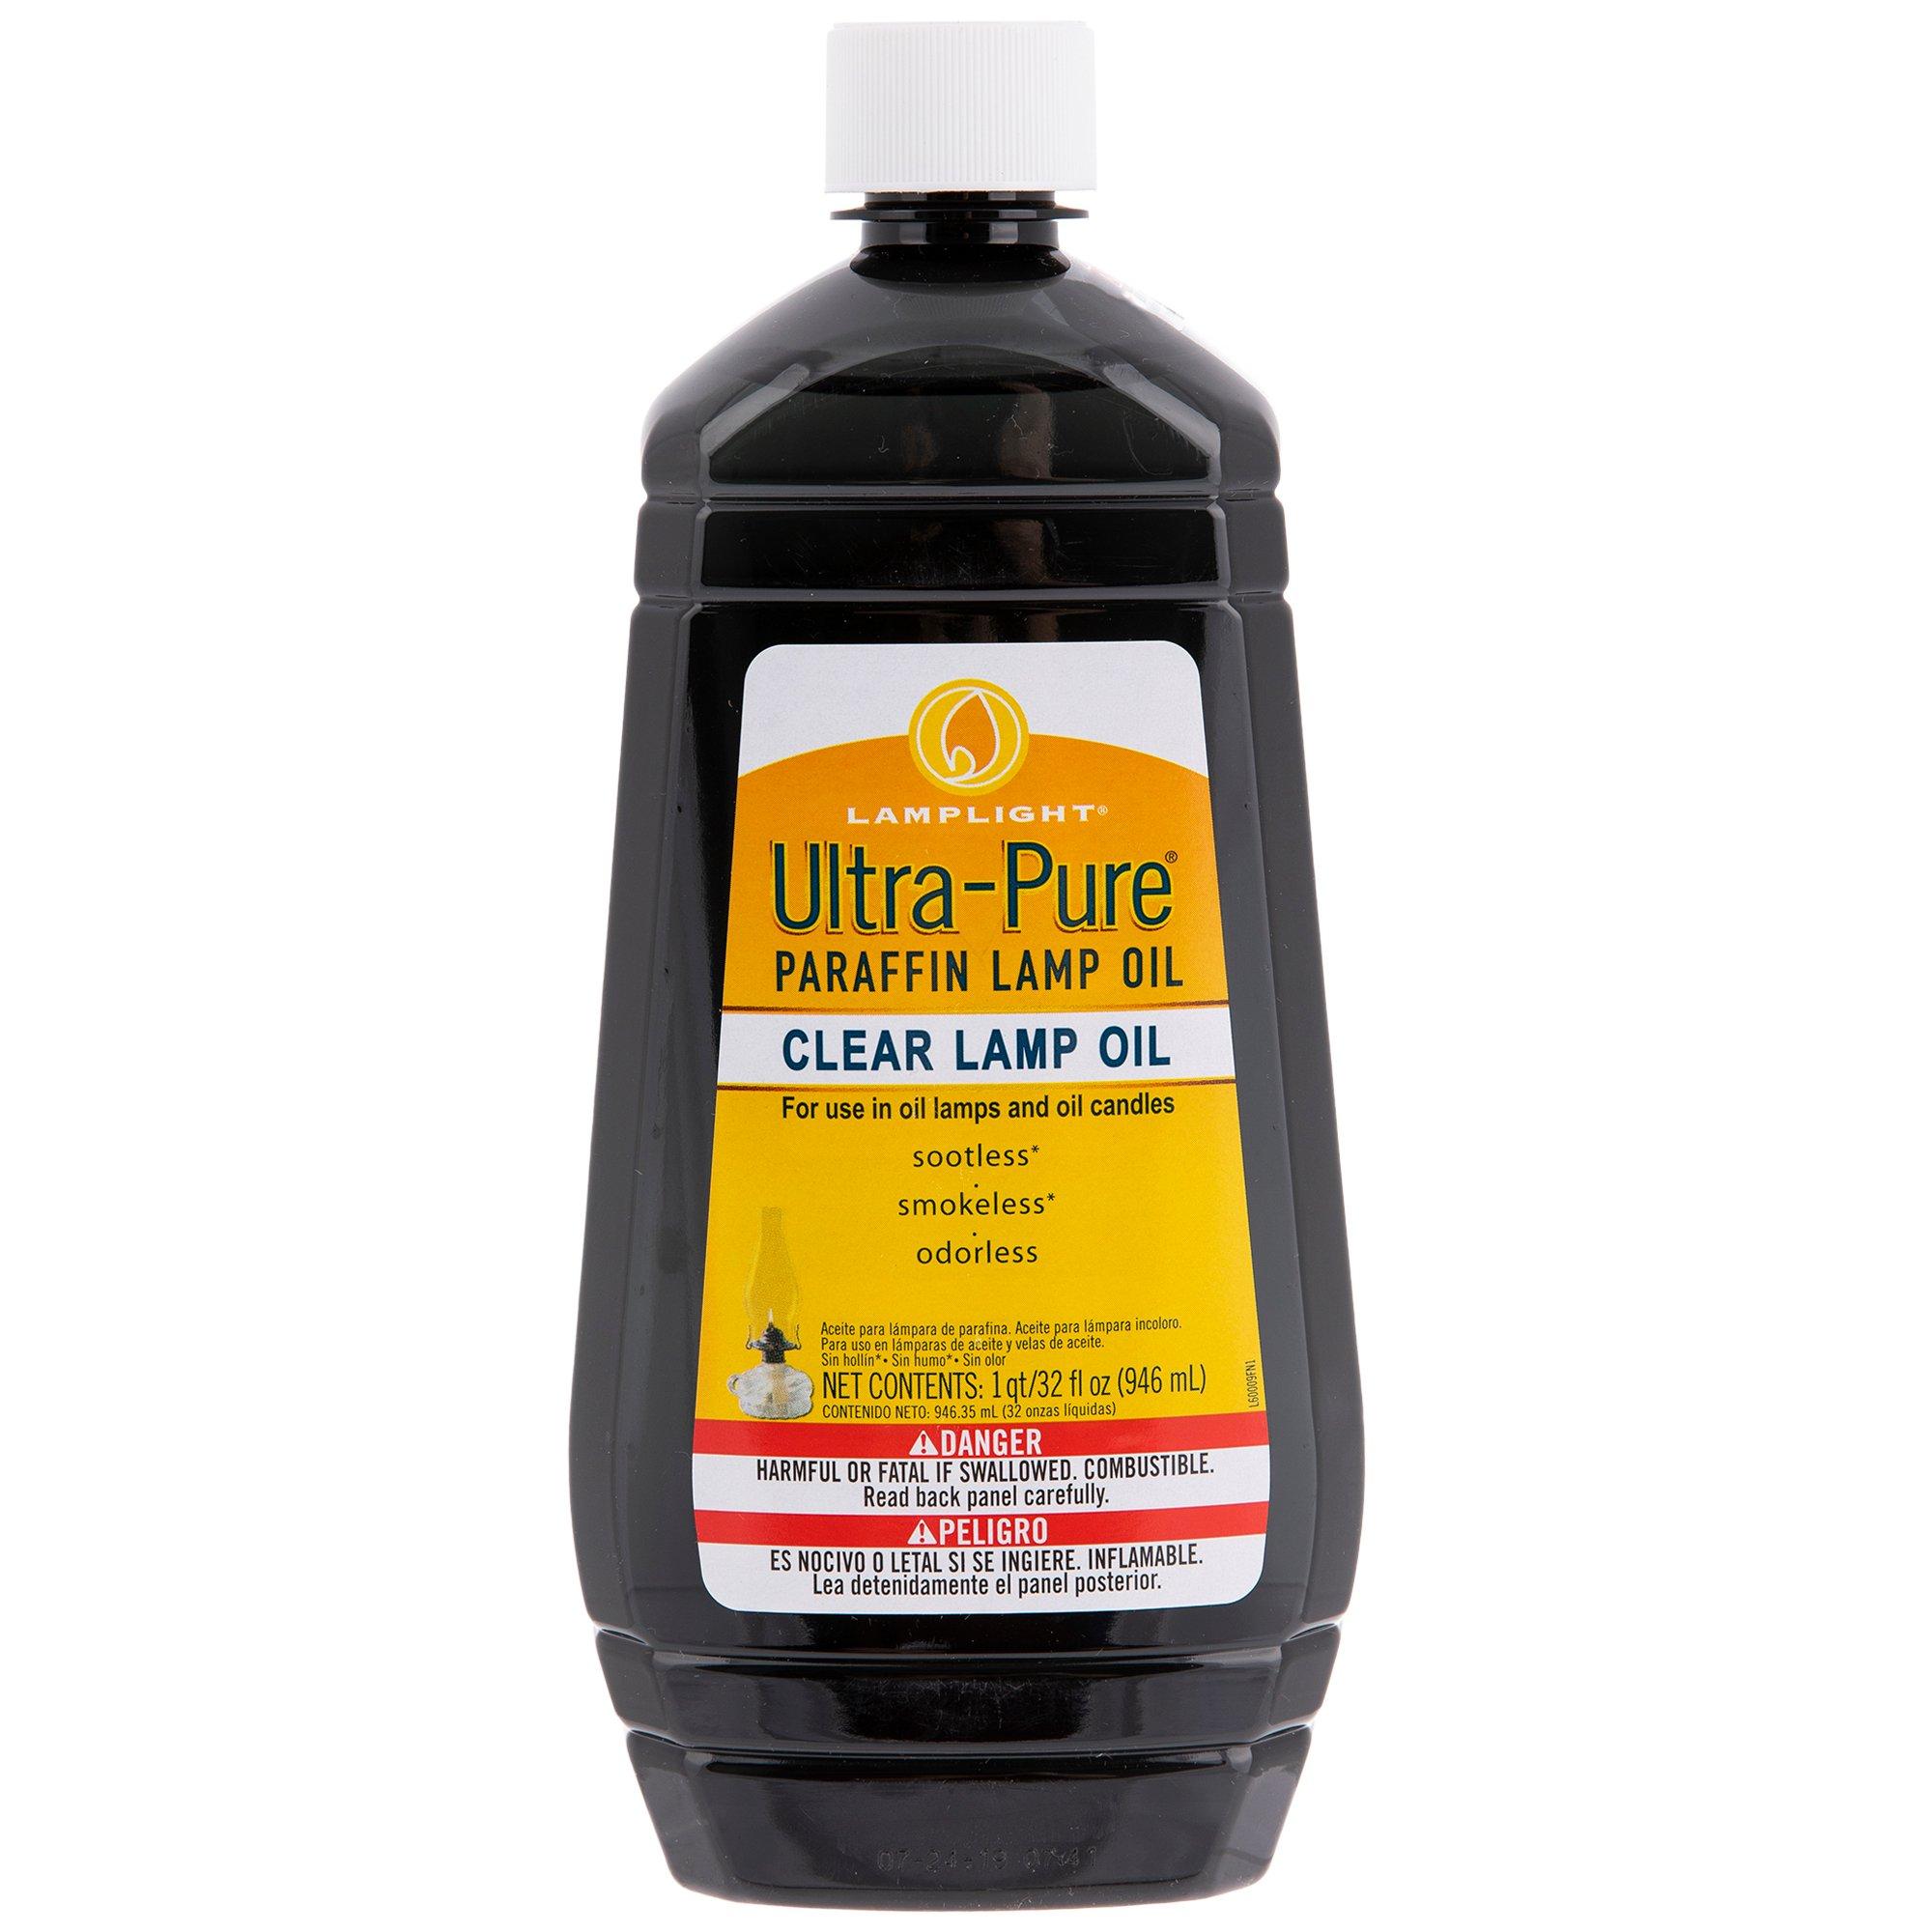 PC5530-100ml  Paraffin oil (Mineral oil), light fraction Clinisciences